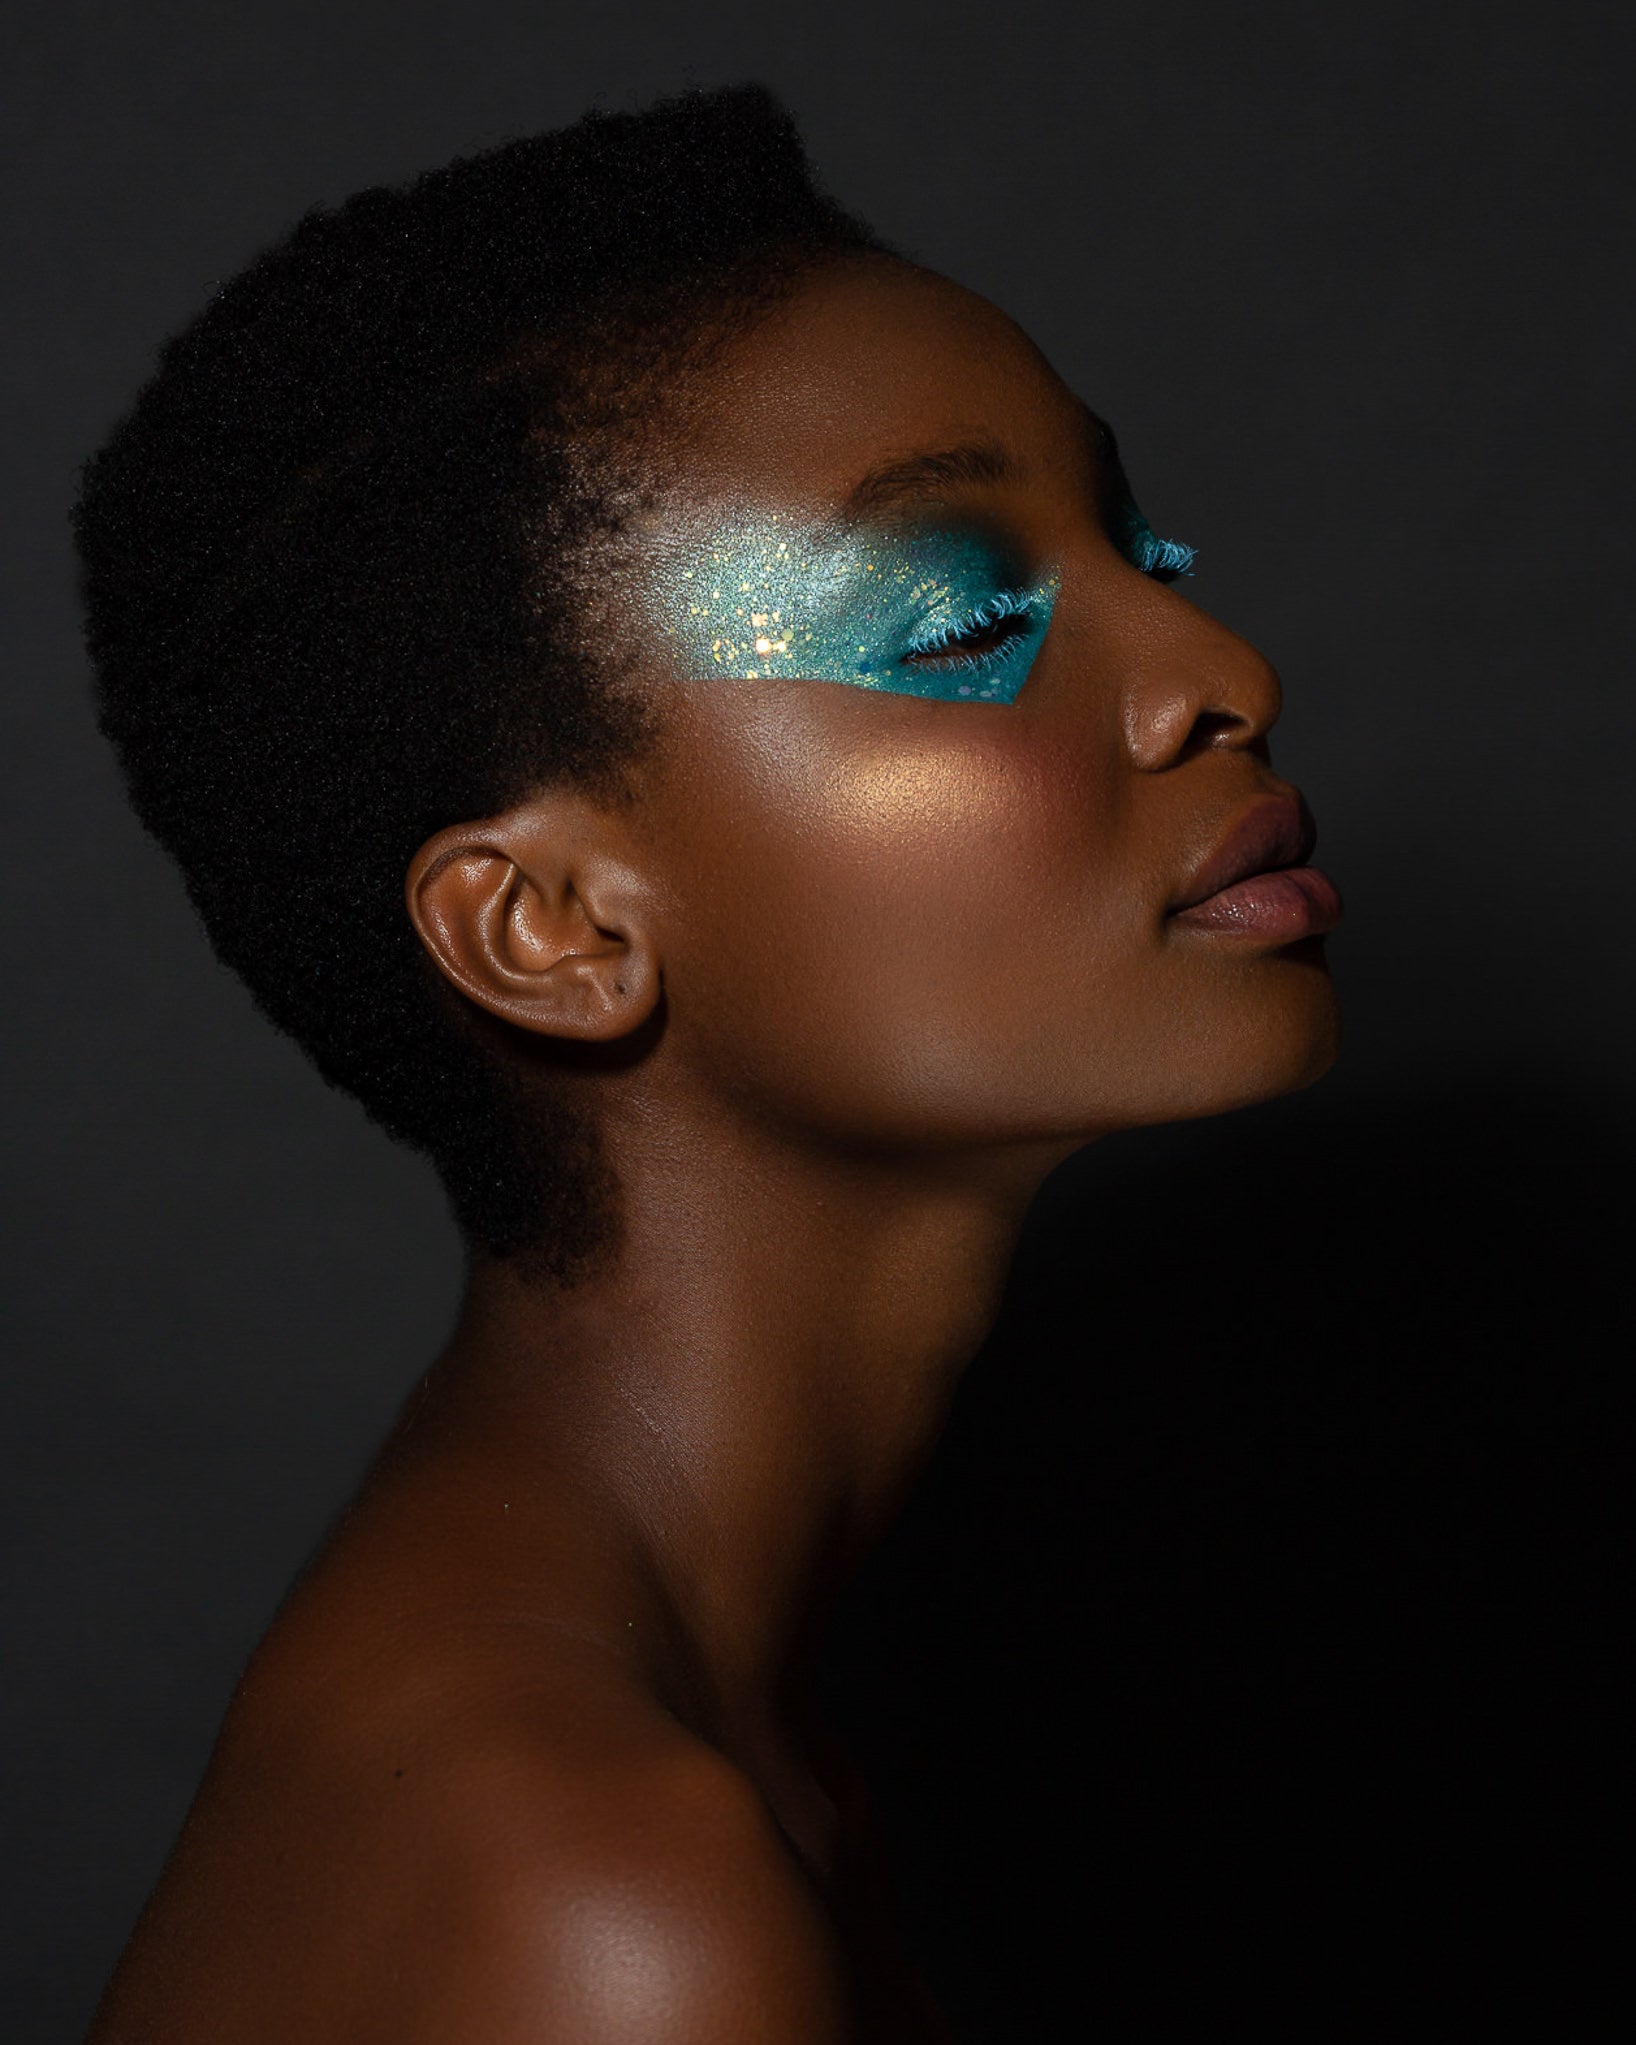 Studio Beauty Makeup test shoot fashion professional portrait photographer photography Johannesburg 